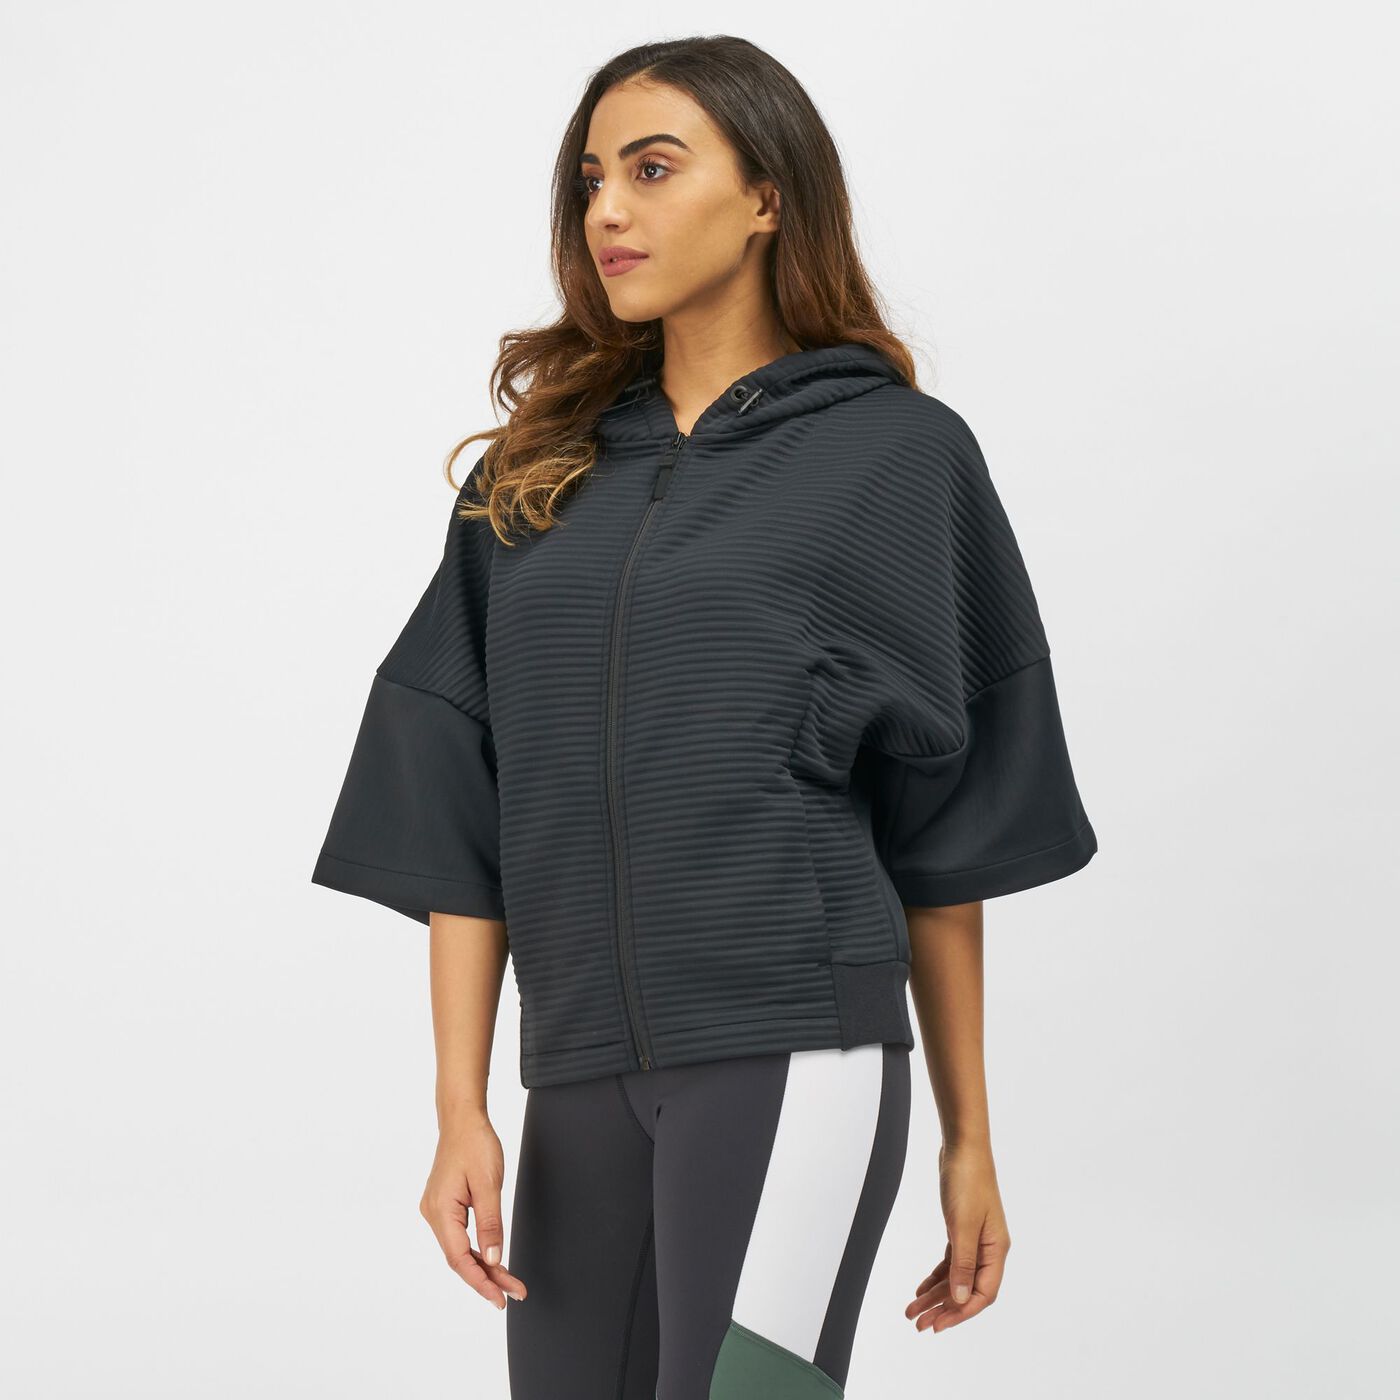 Women's Thermowarm Deltapeak Short Sleeve Full-Zip Jacket